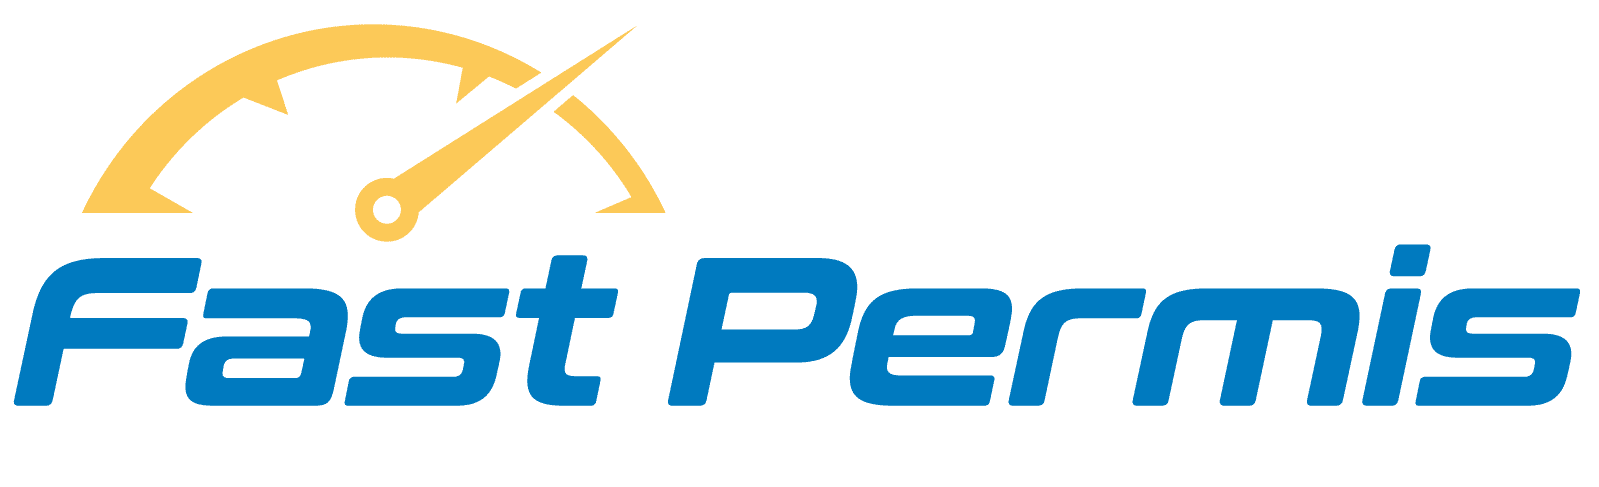 Fast Permis Logo